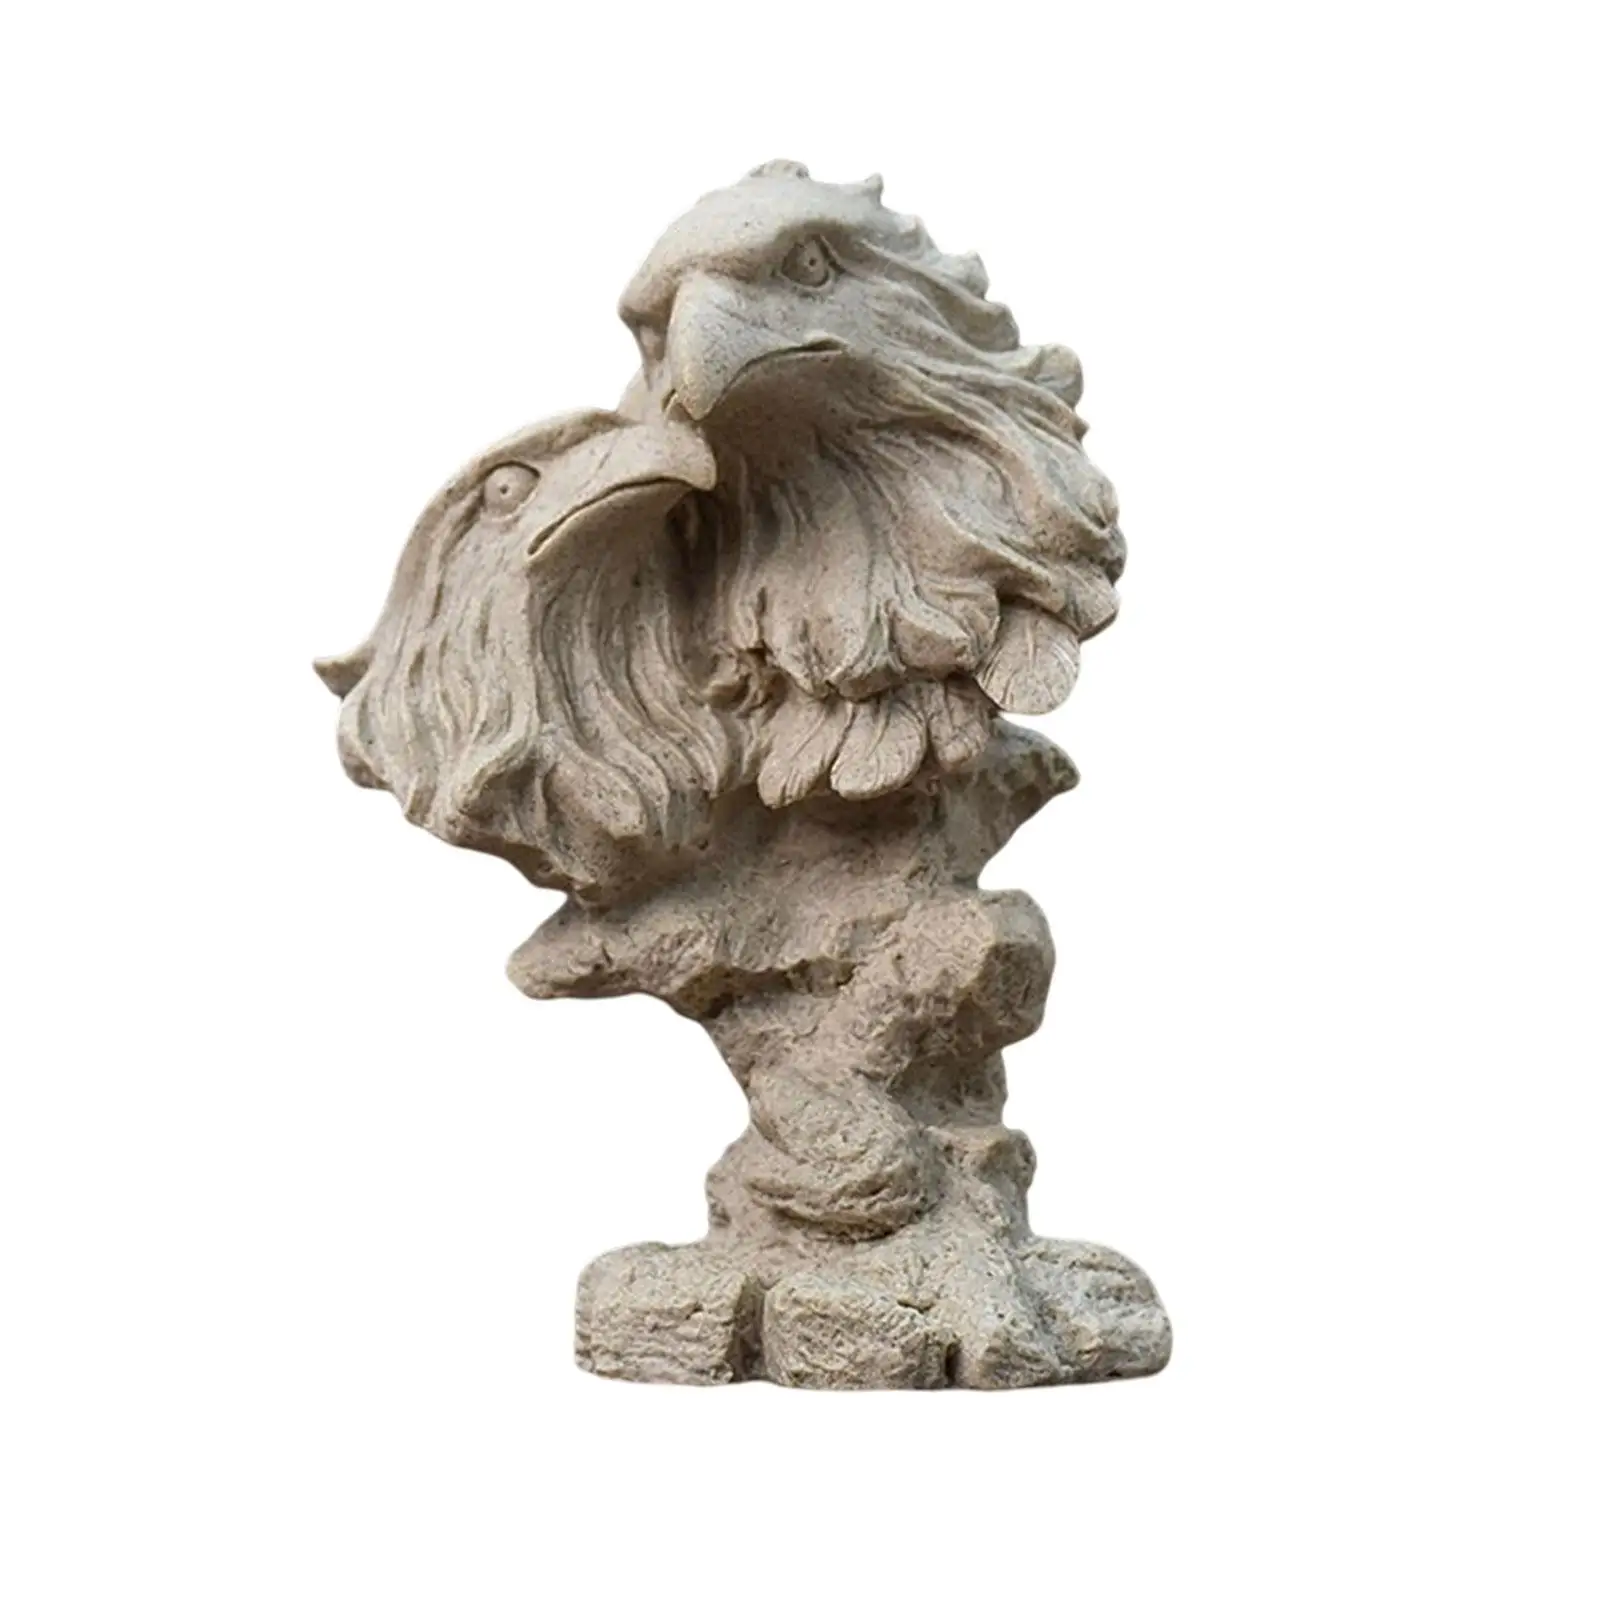 European Eagle Statue Photo Props Desktop Decoration Sculpture Figurine